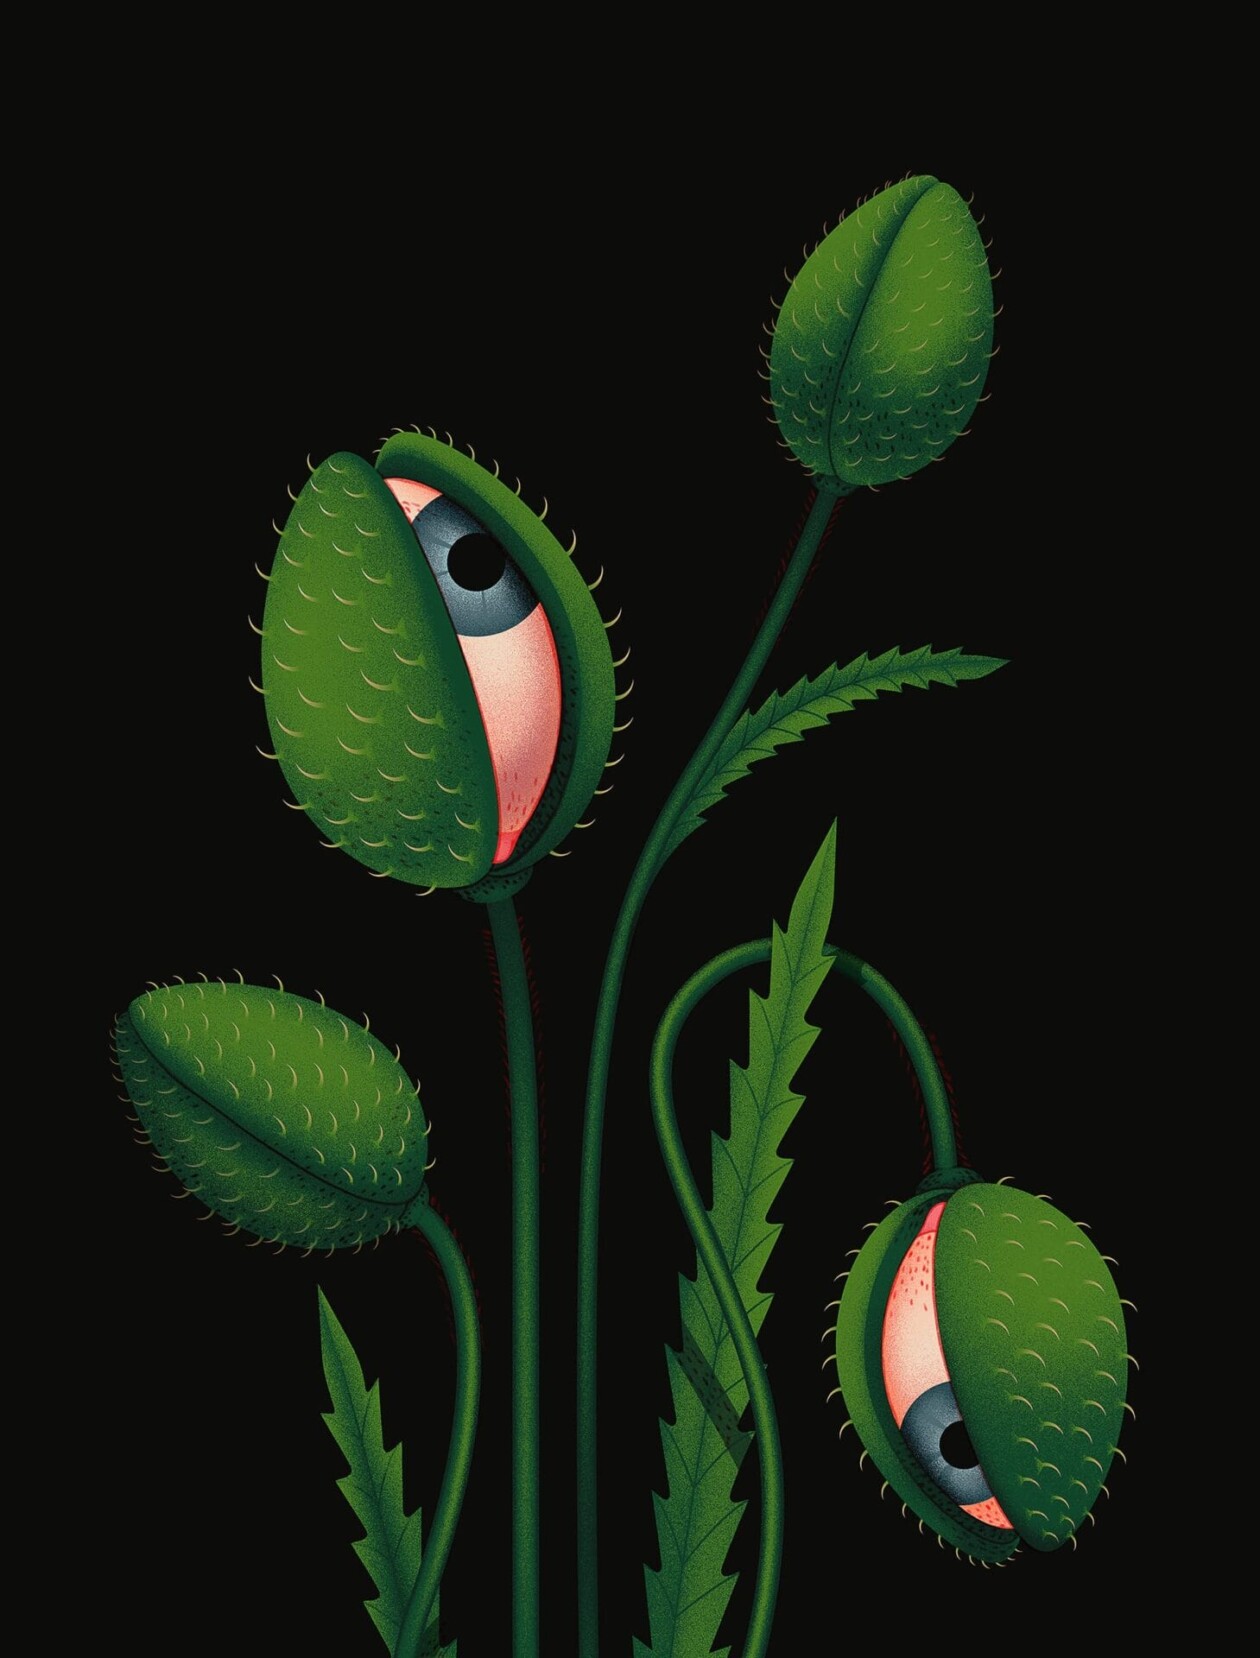 Marvelous Surrealistic Illustrations Of Eyes Peering From Plants And Animals By Ana Miminoshvili (15)